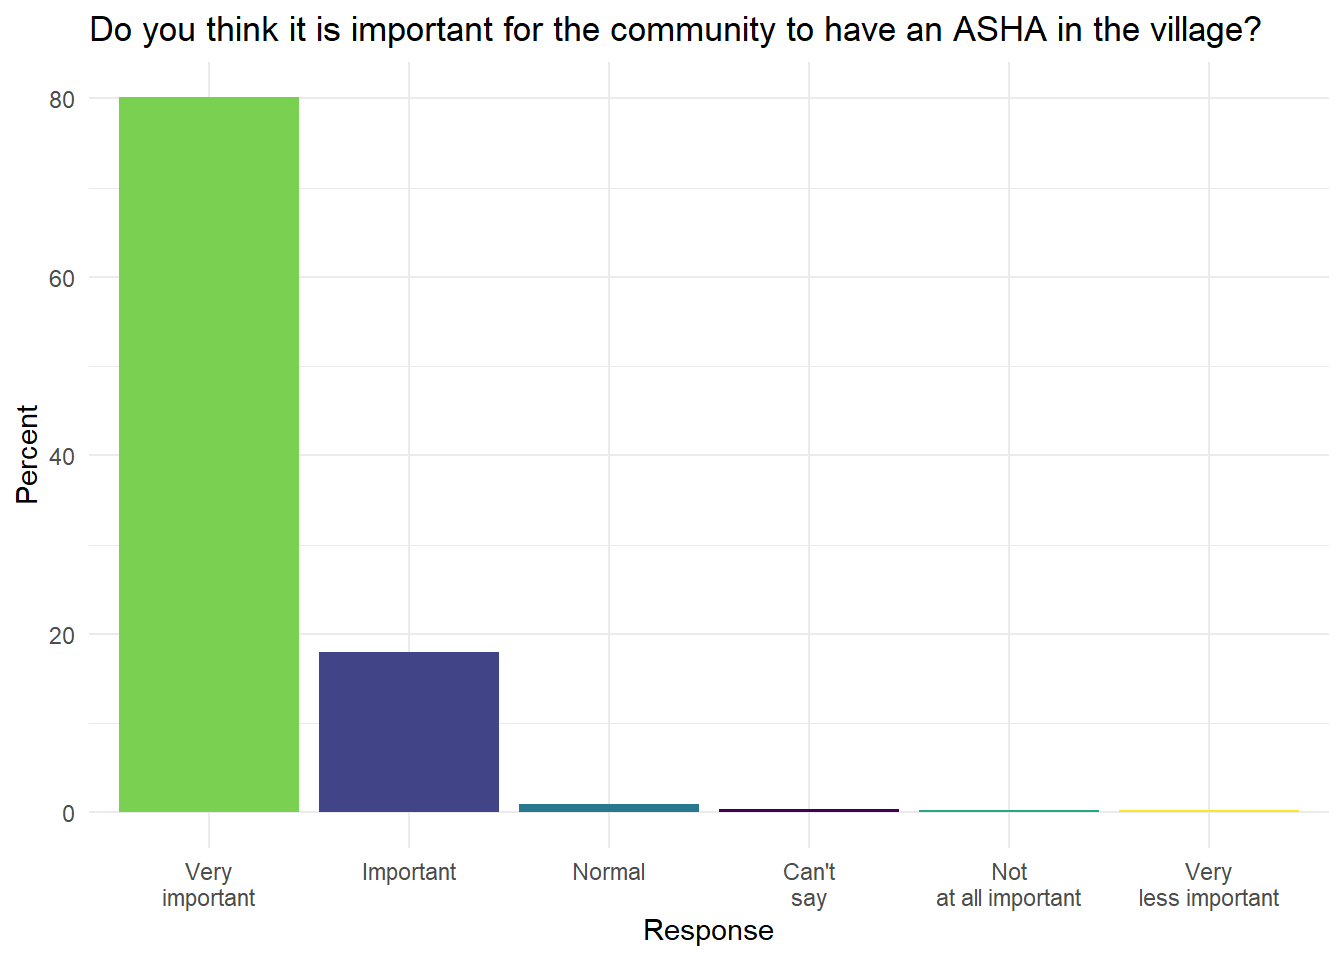 Community perception of ASHA importance.